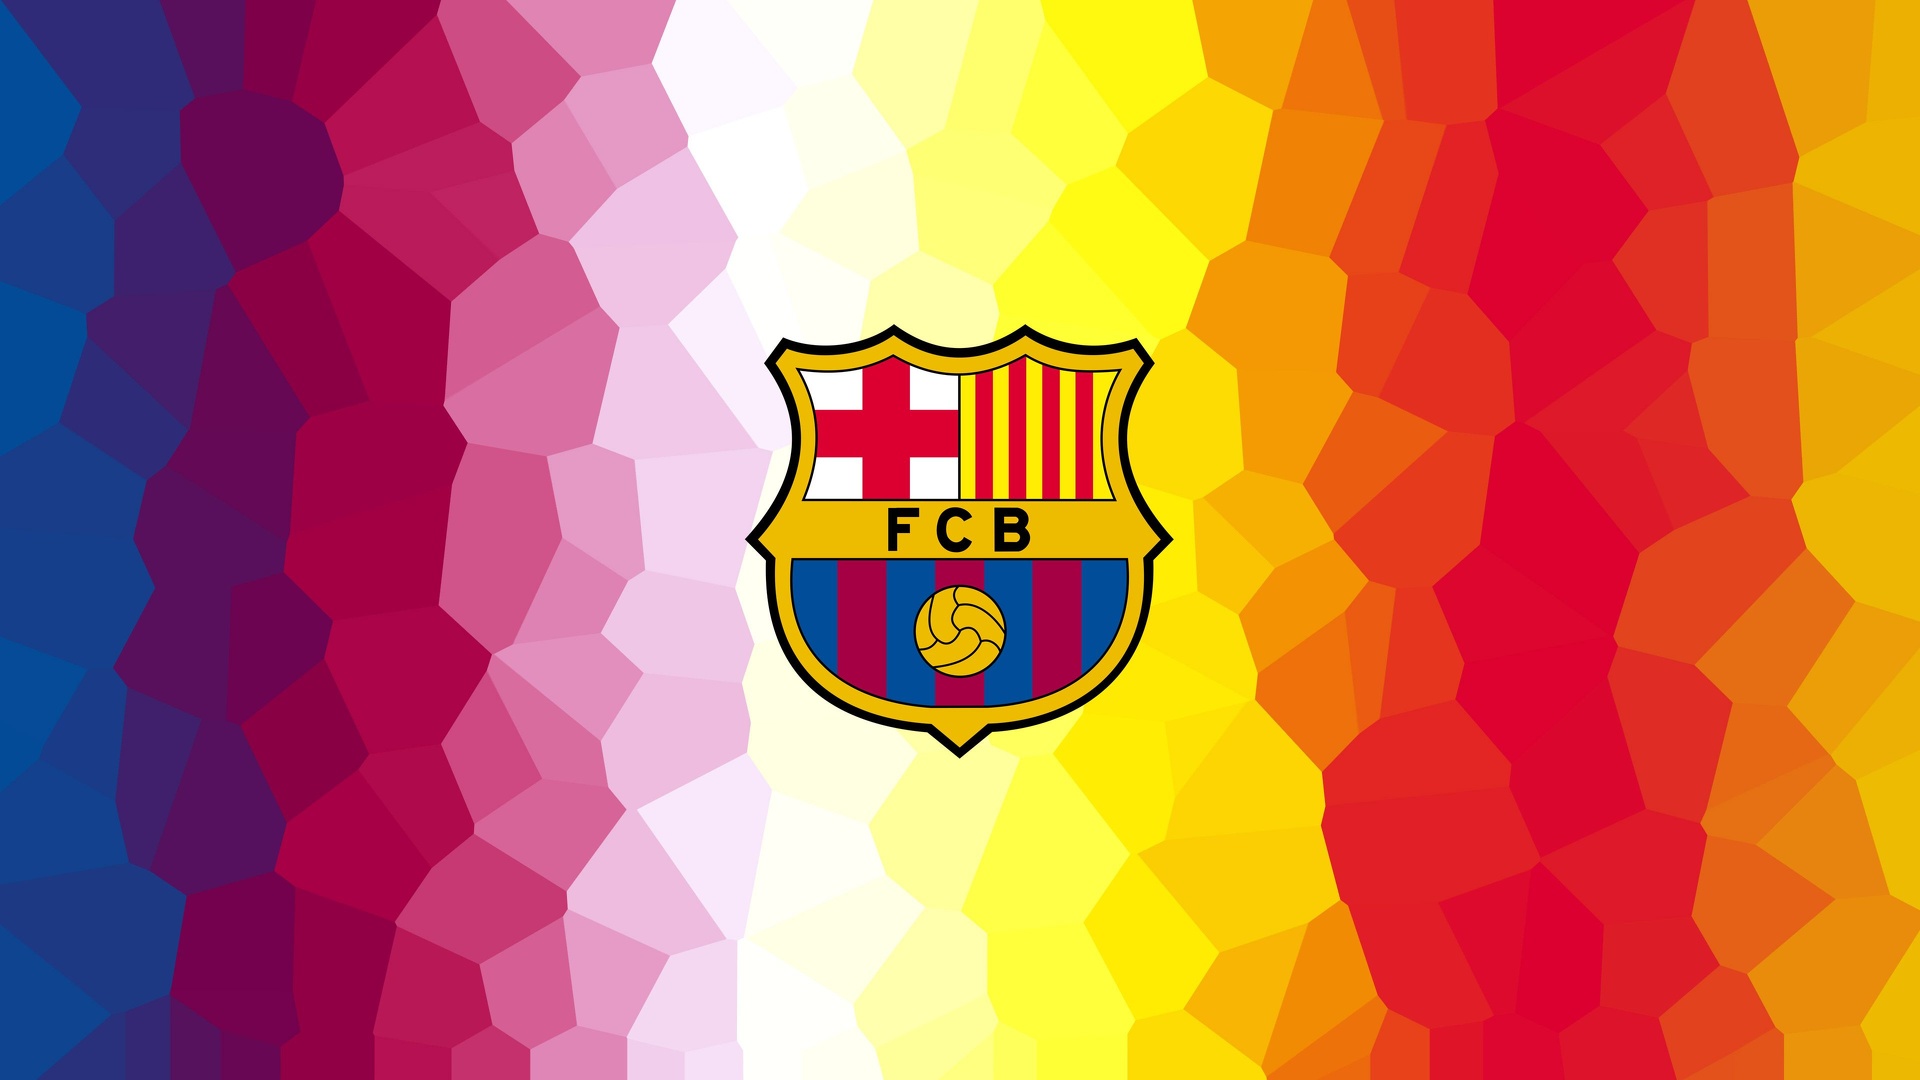 FC Barcelone - logo - fond d'écran 4K.jpg